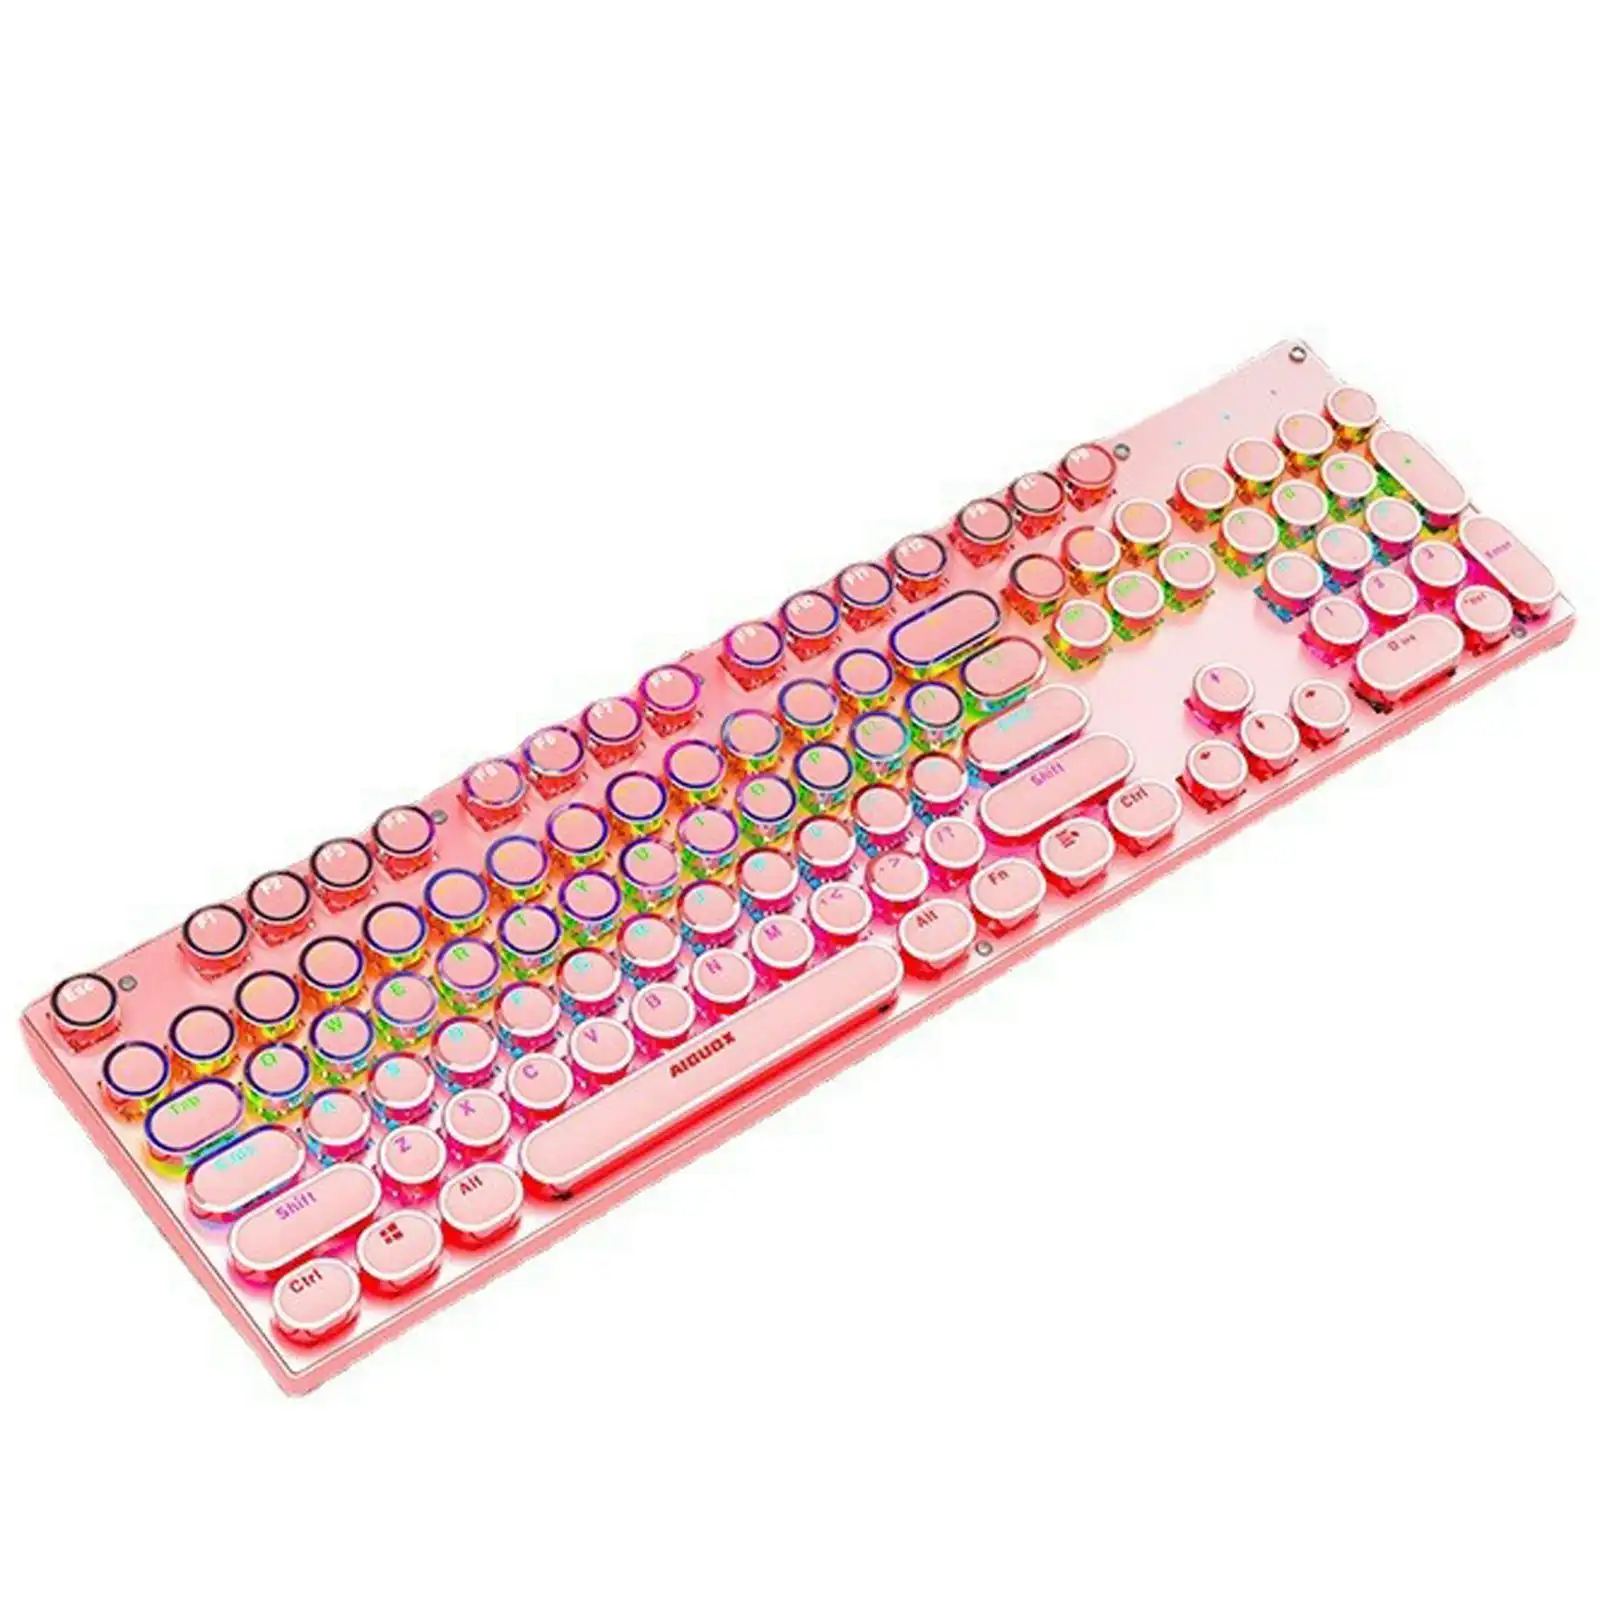 TODO Mechanical Gaming Keyboard RGB LED Linear Blue Switch USB Windows - Pink